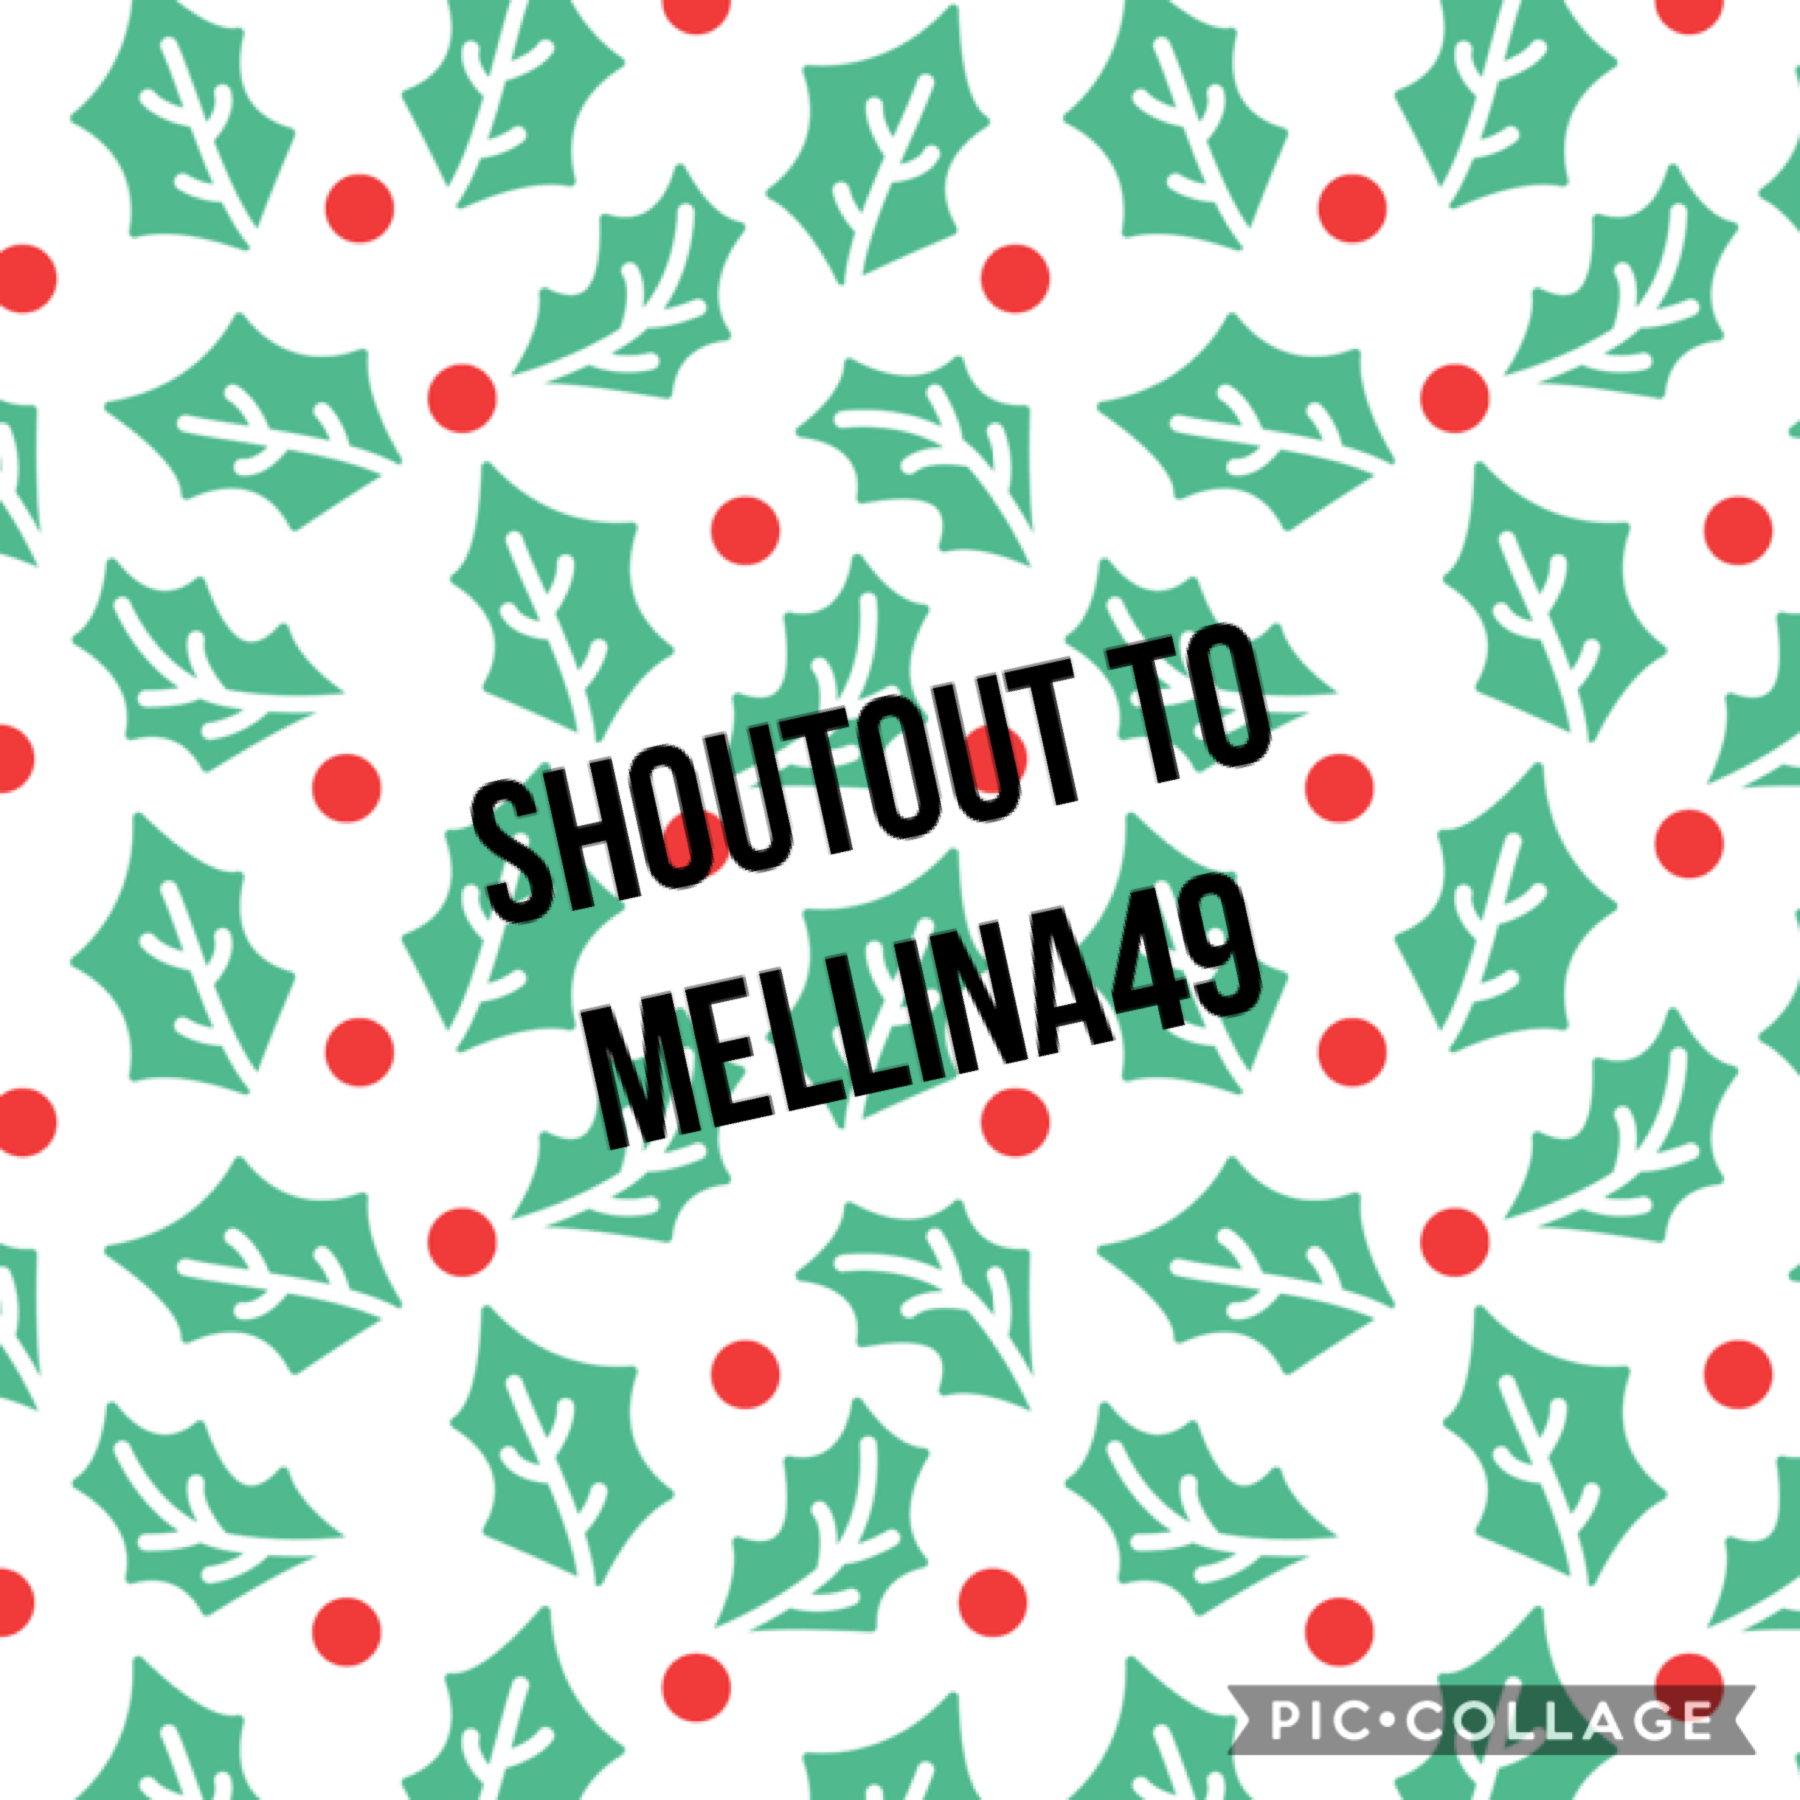 Shoutout to MELLINA49